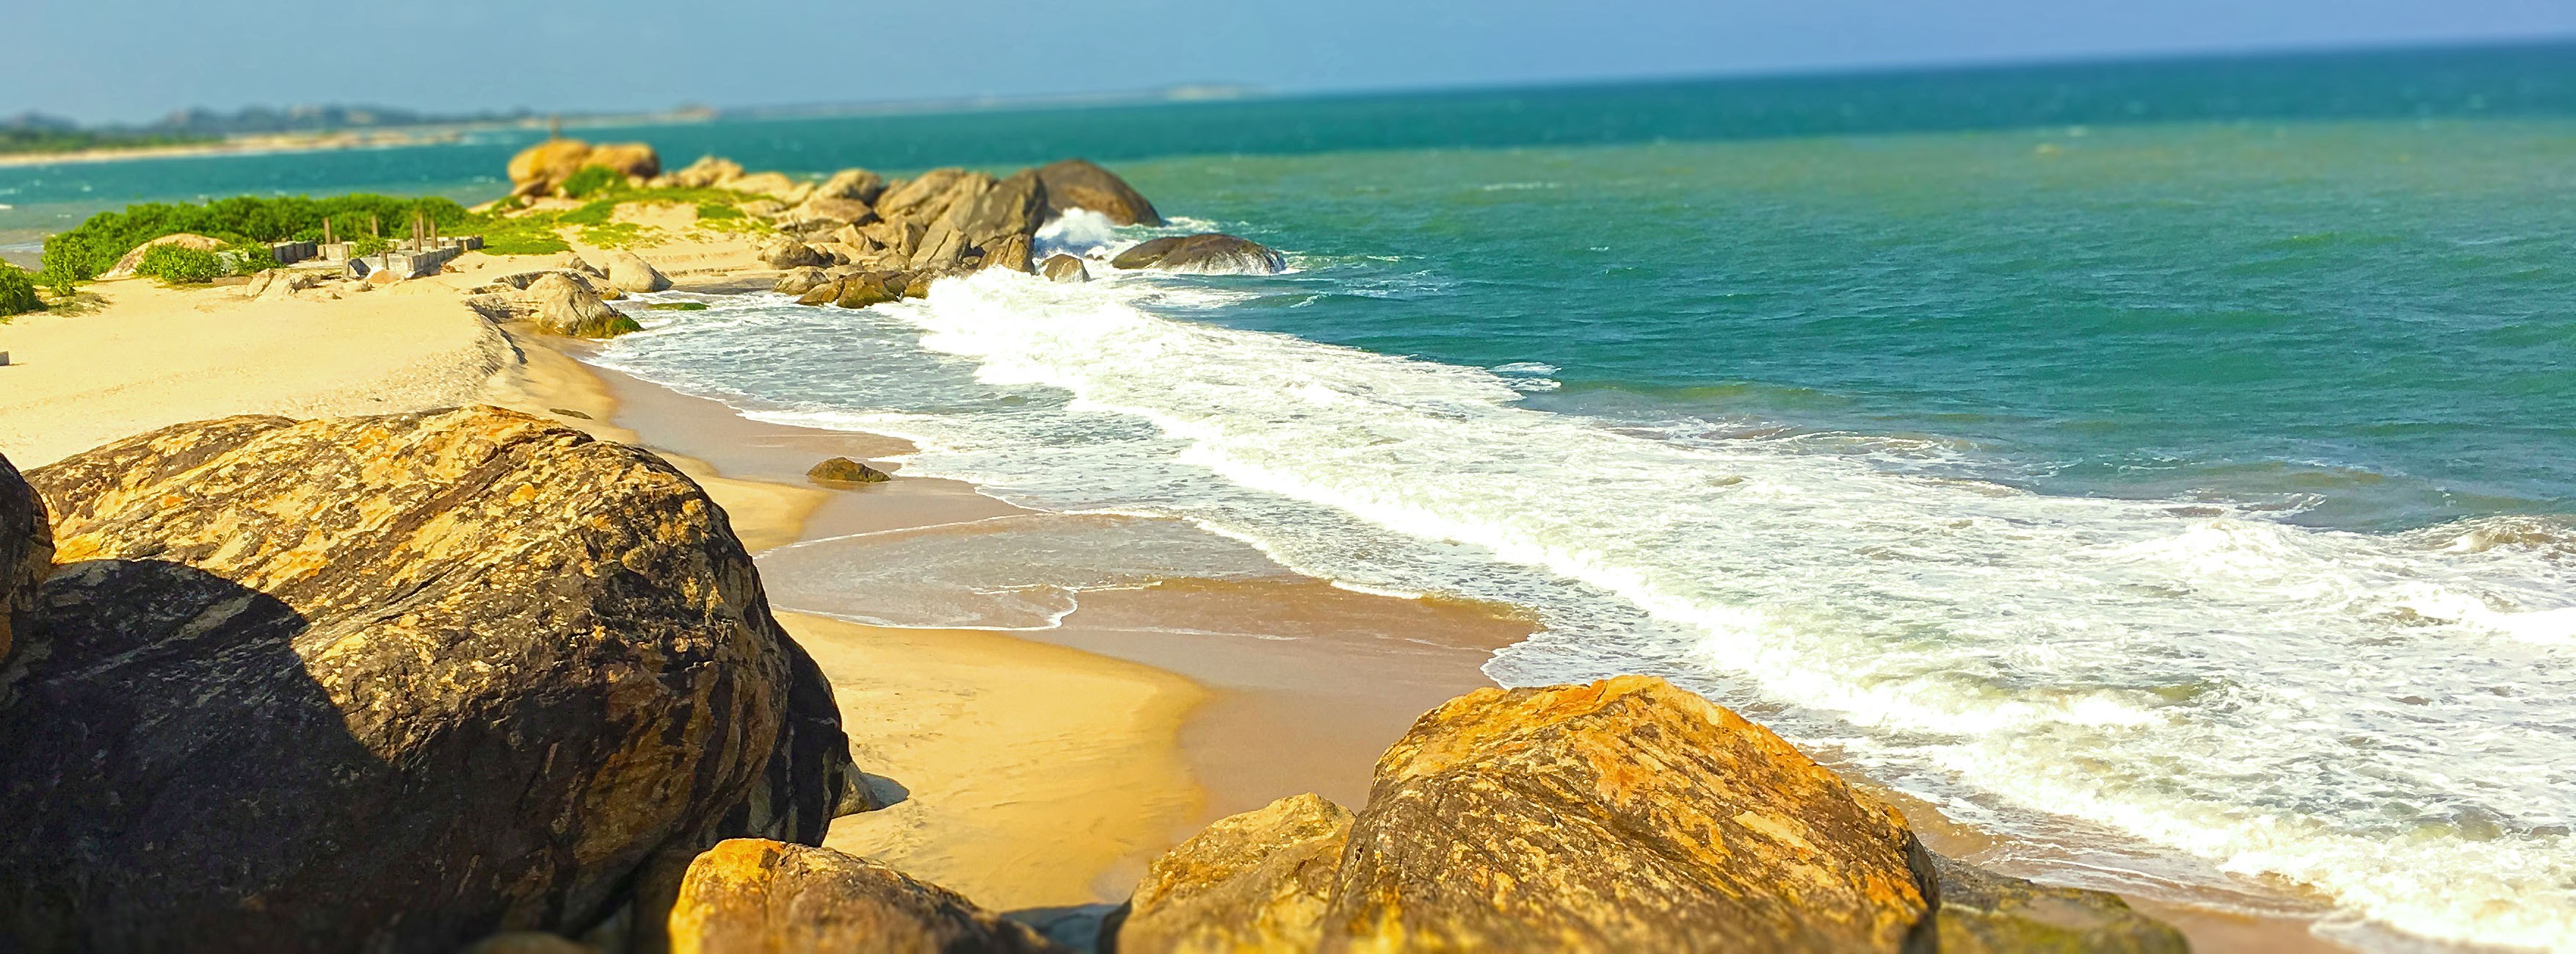 Sri Lanka Nature Beach Waves Sea Rock Photography Multiple Display 3509x1299